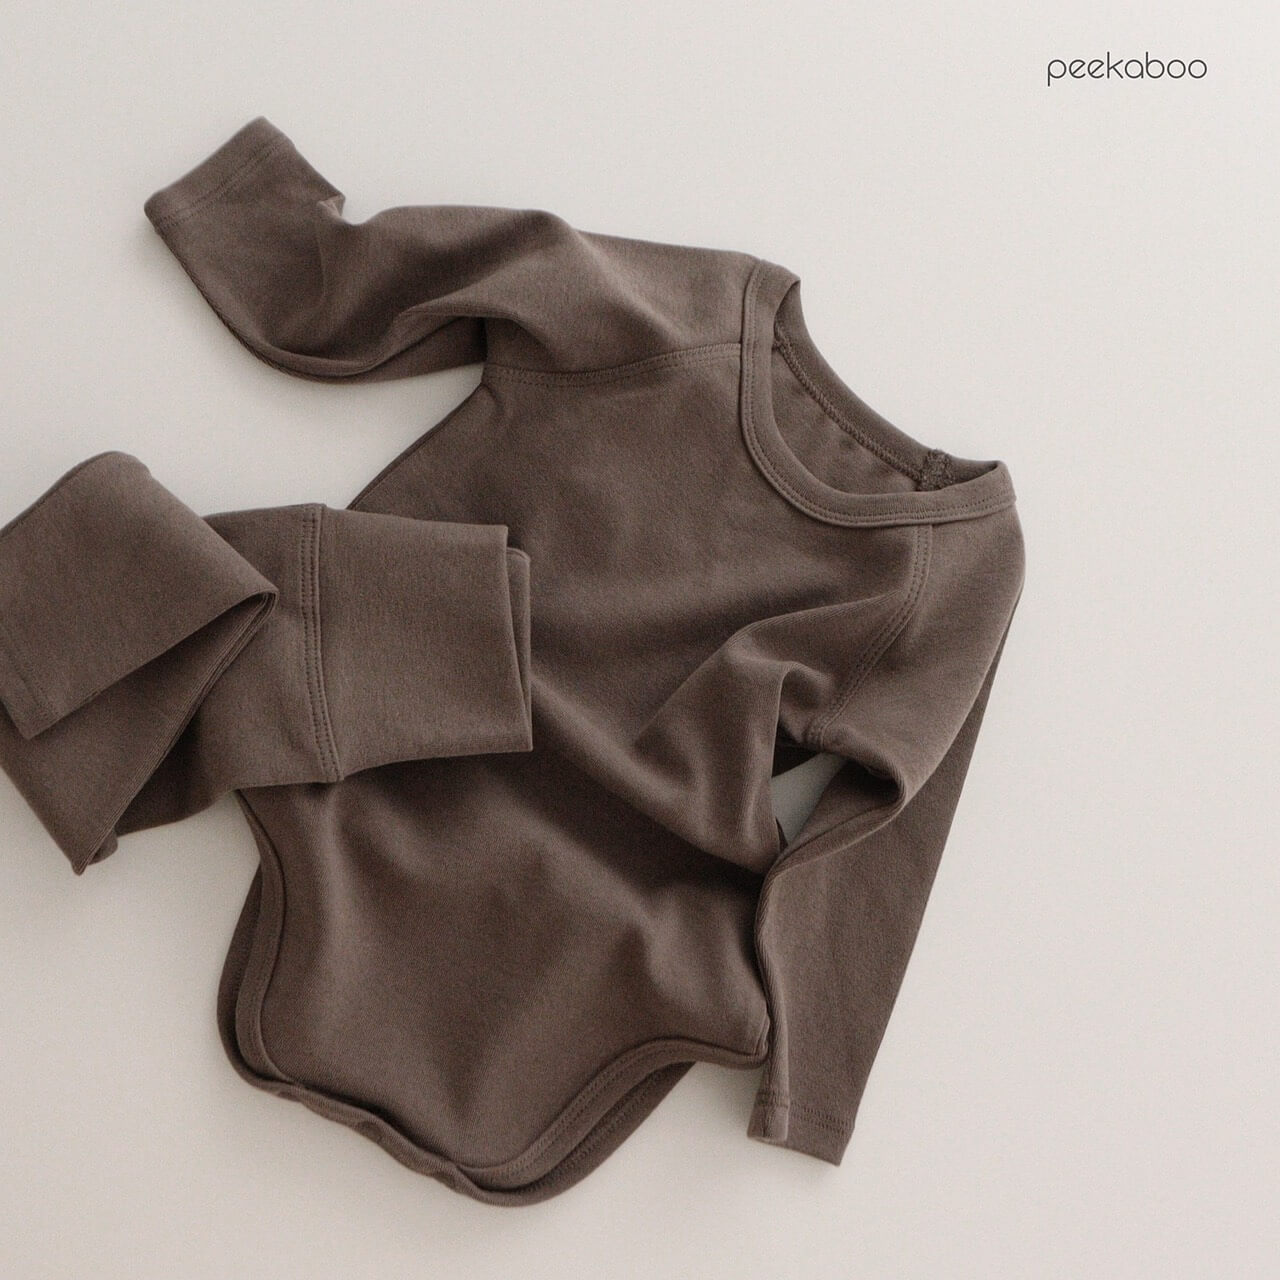 Bodysuit Peekaboo Basic kèm quần made in Hàn Quốc